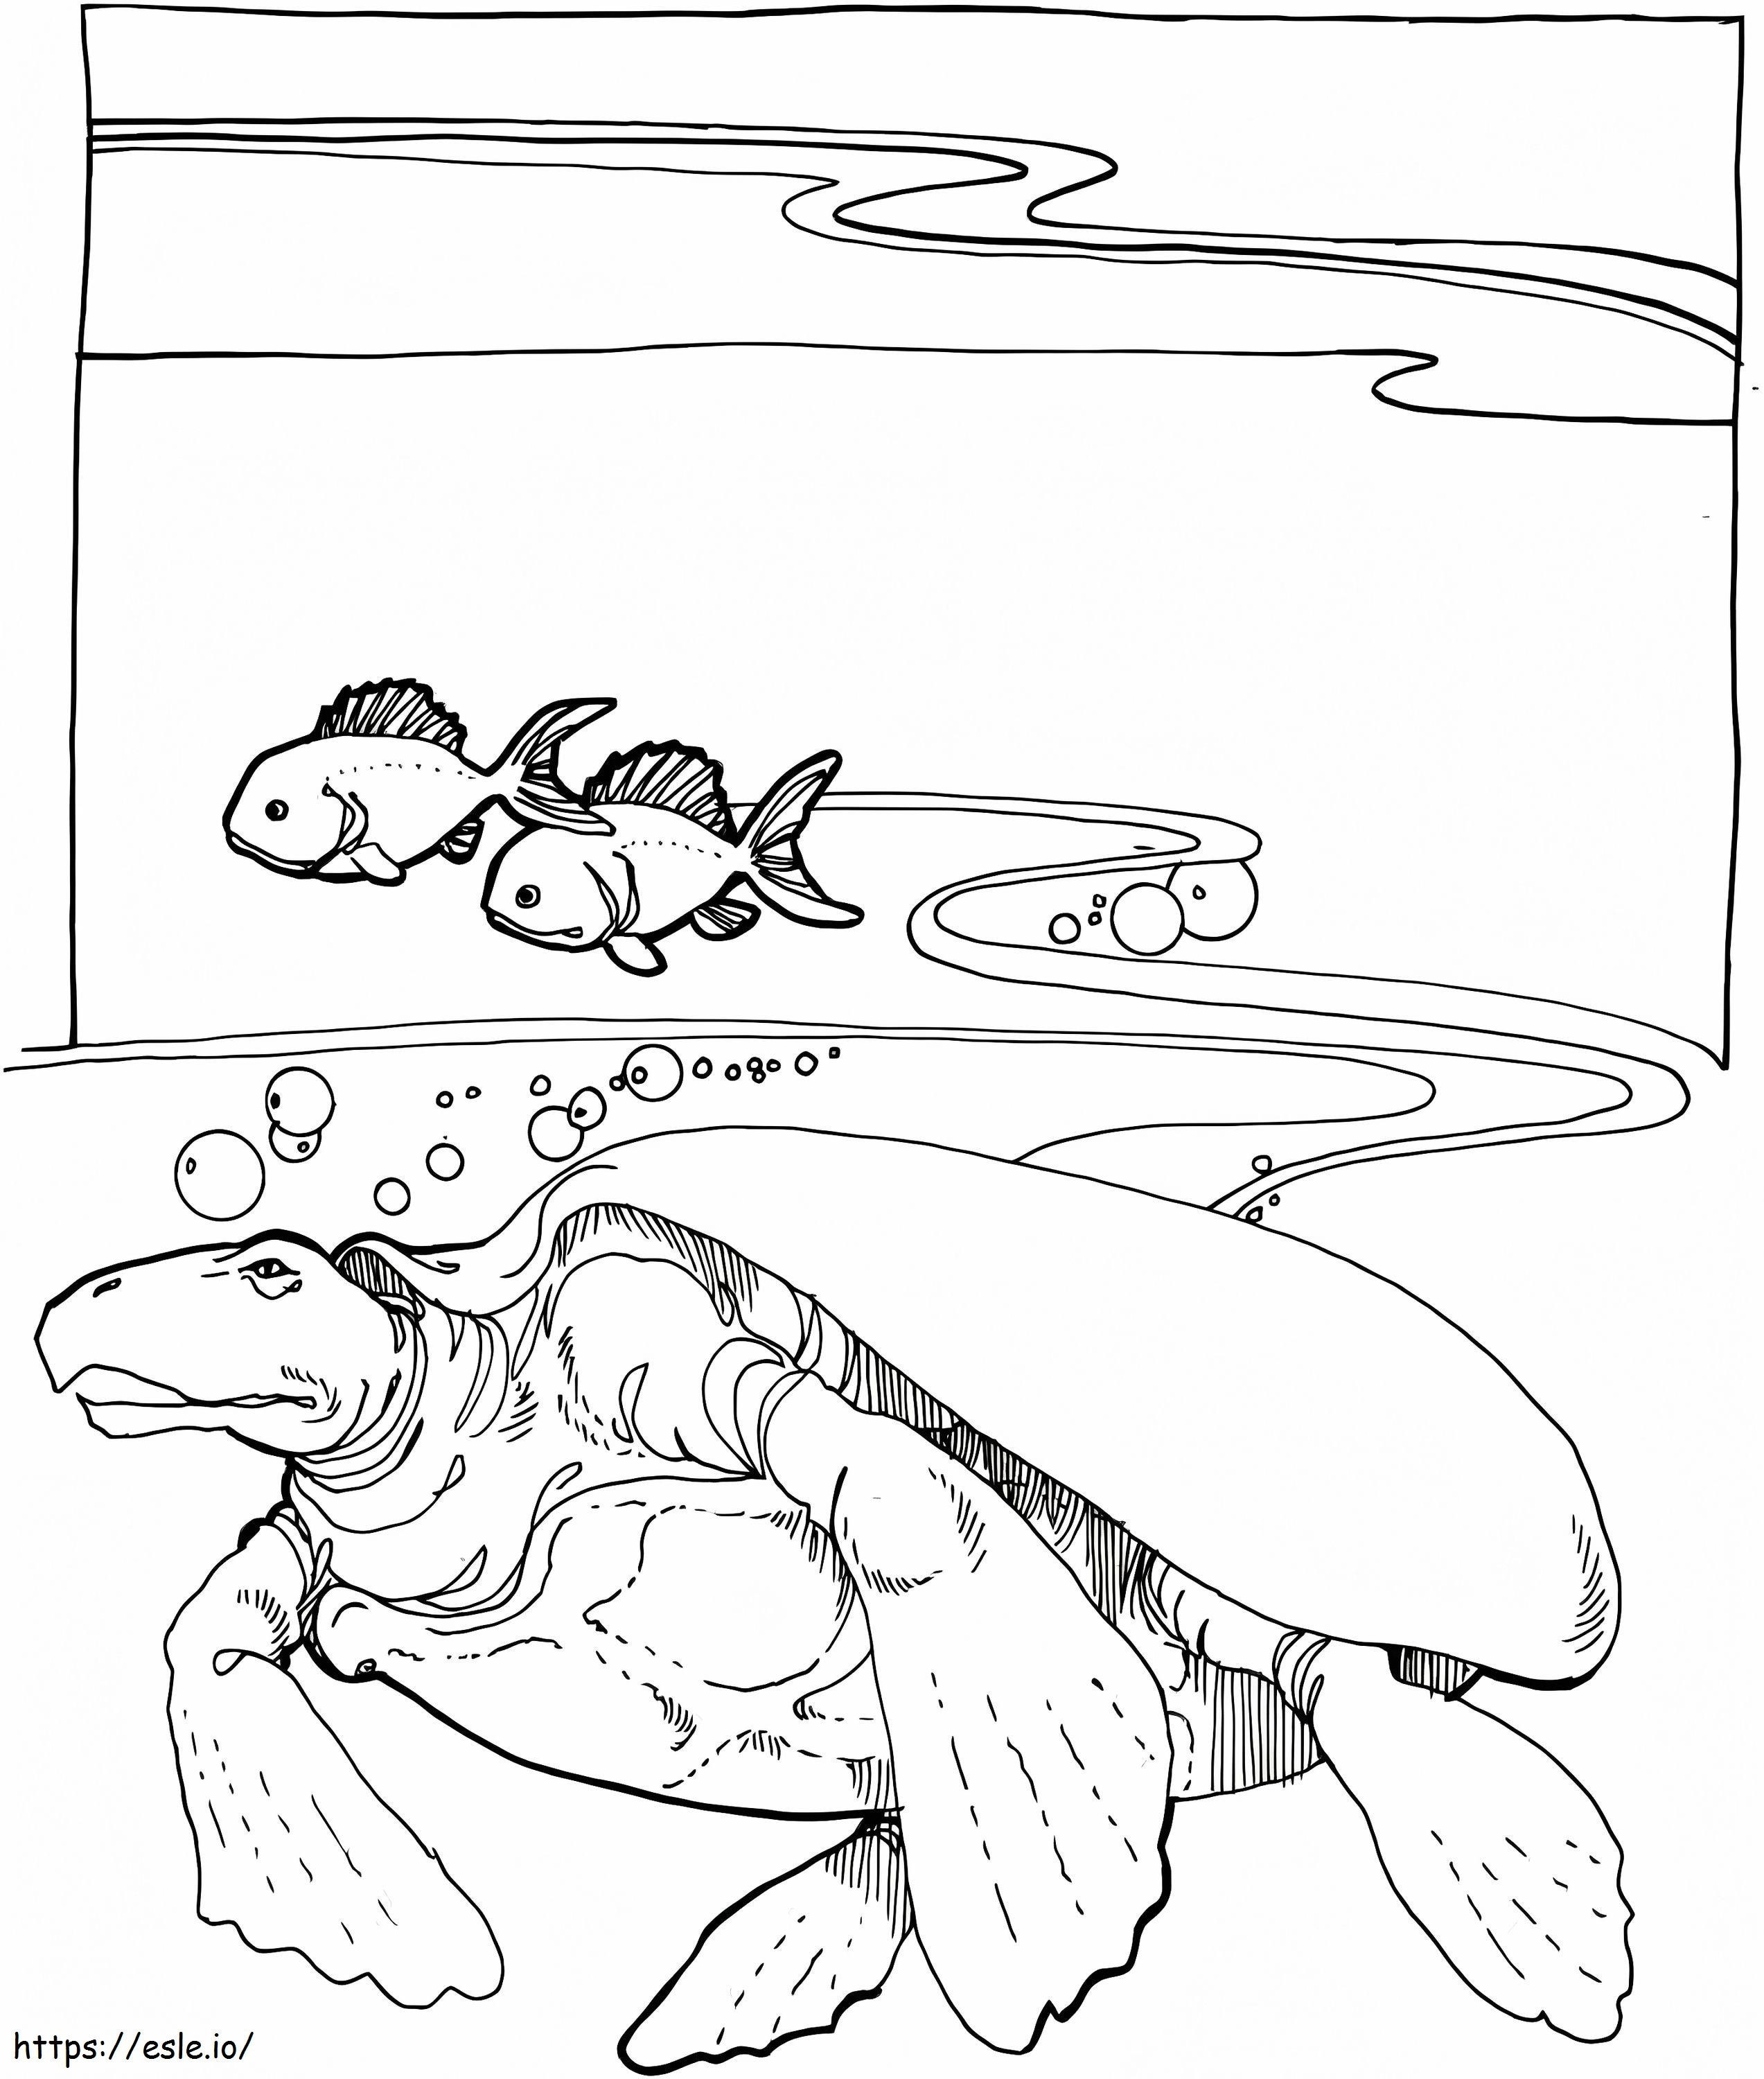 Extinta Tartaruga Marinha Archelon para colorir